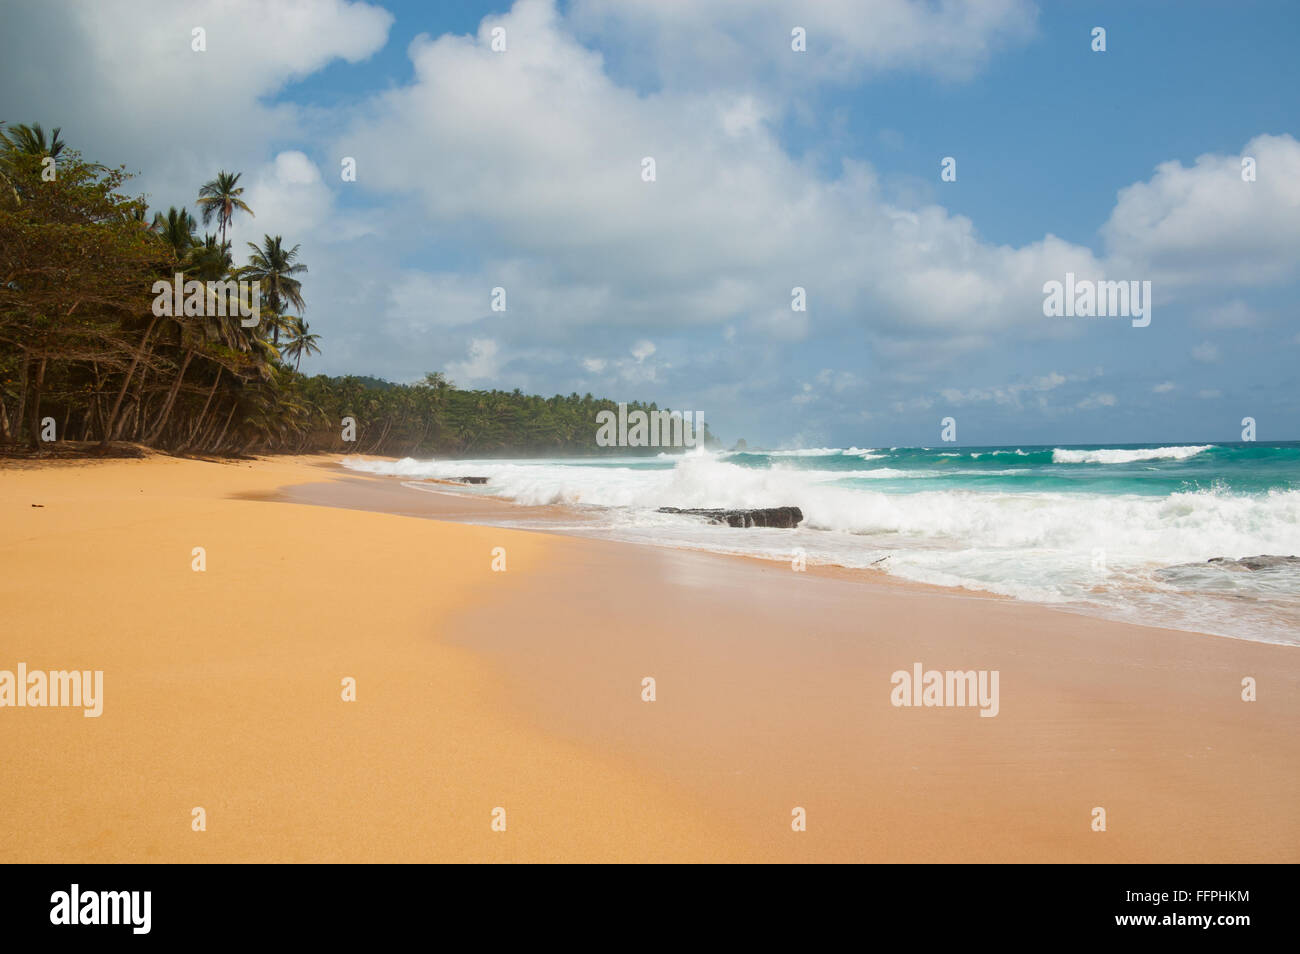 Tropical beach with palm trees and heavy sea. Praia Jale, Sao tome and Principe. Stock Photo